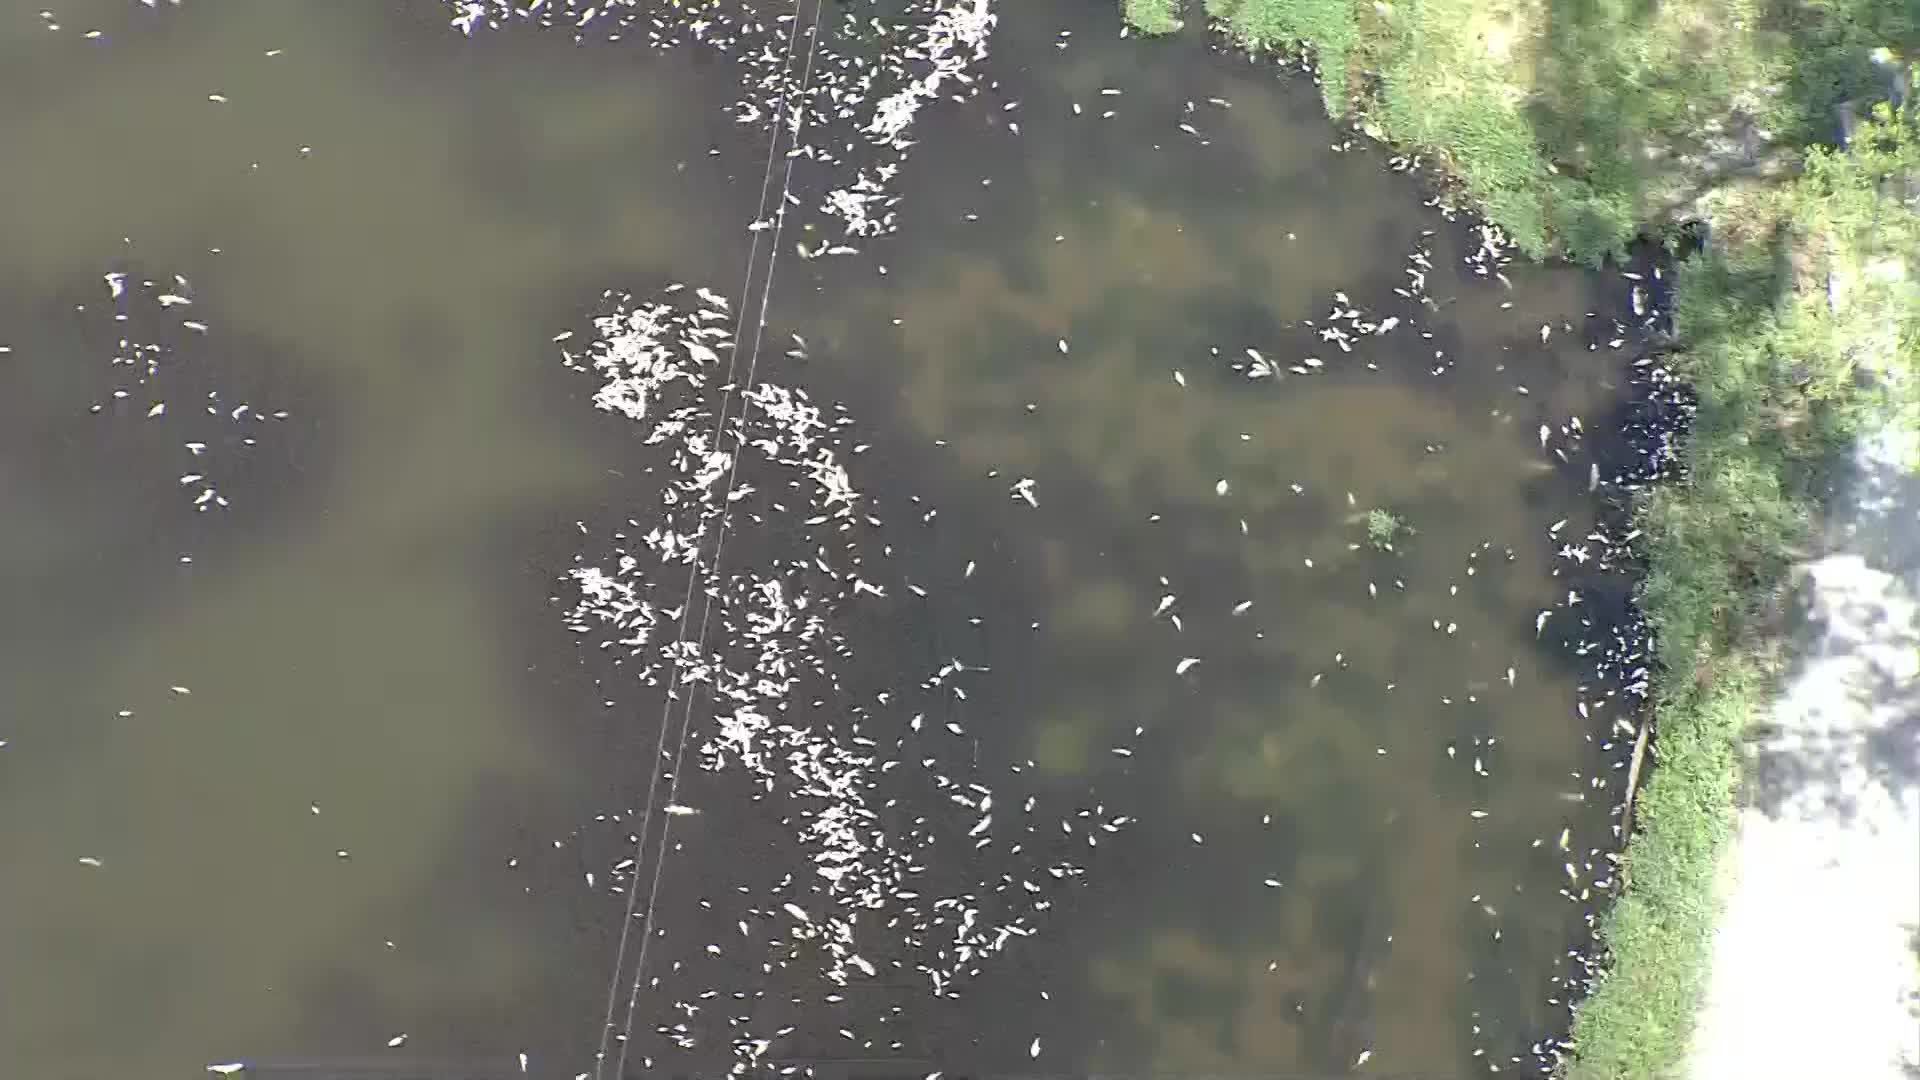 NewsChopper 9 video: Thousands of dead fish found at Cedar Lake in Olathe, Kansas